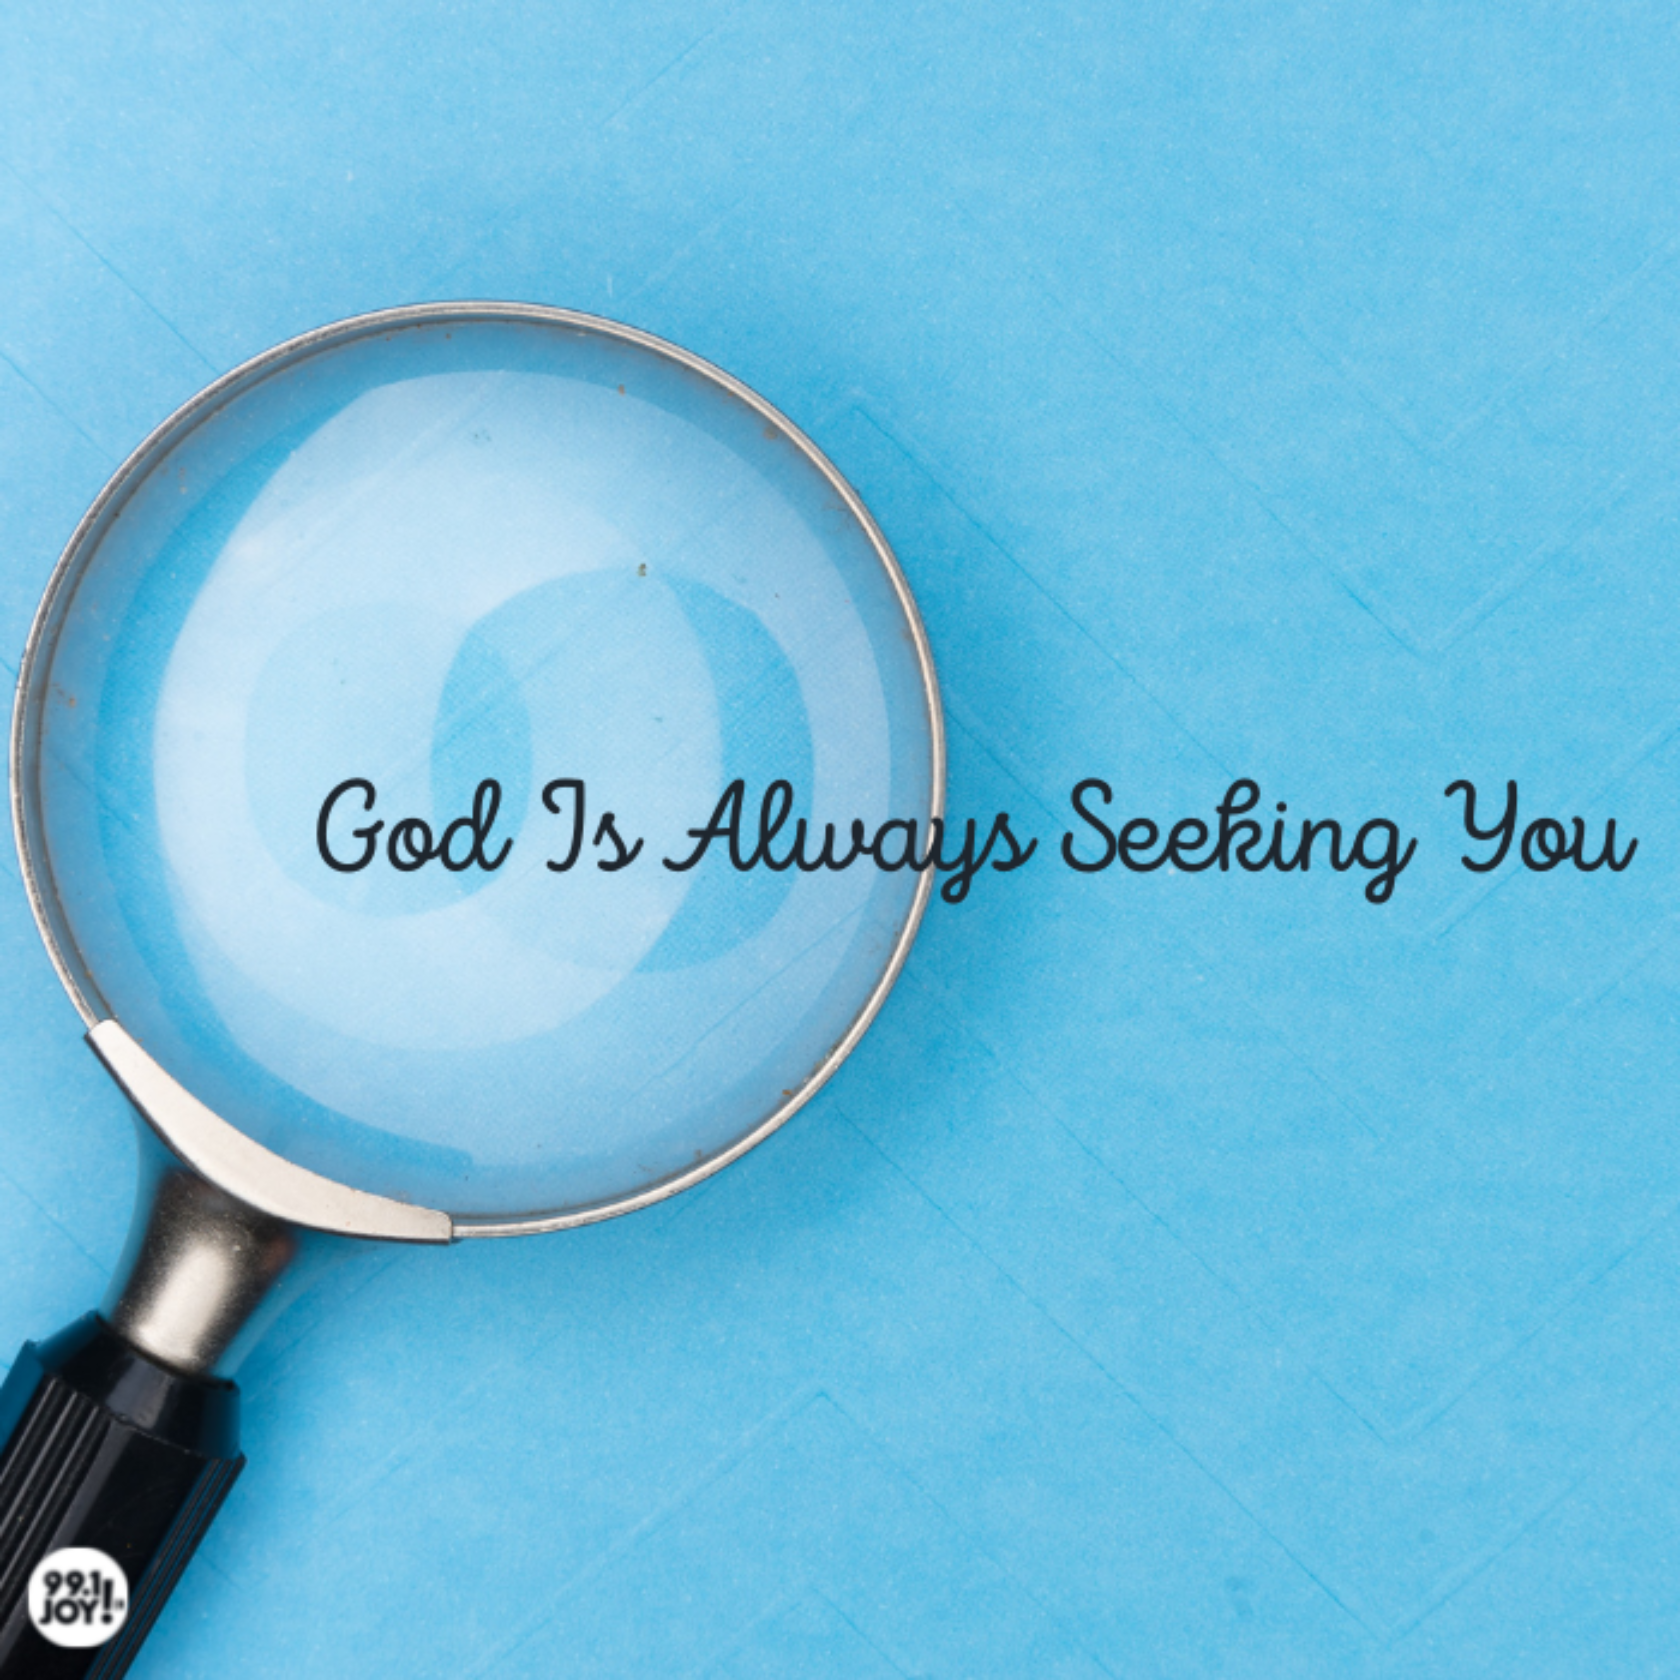 God Is Always Seeking You